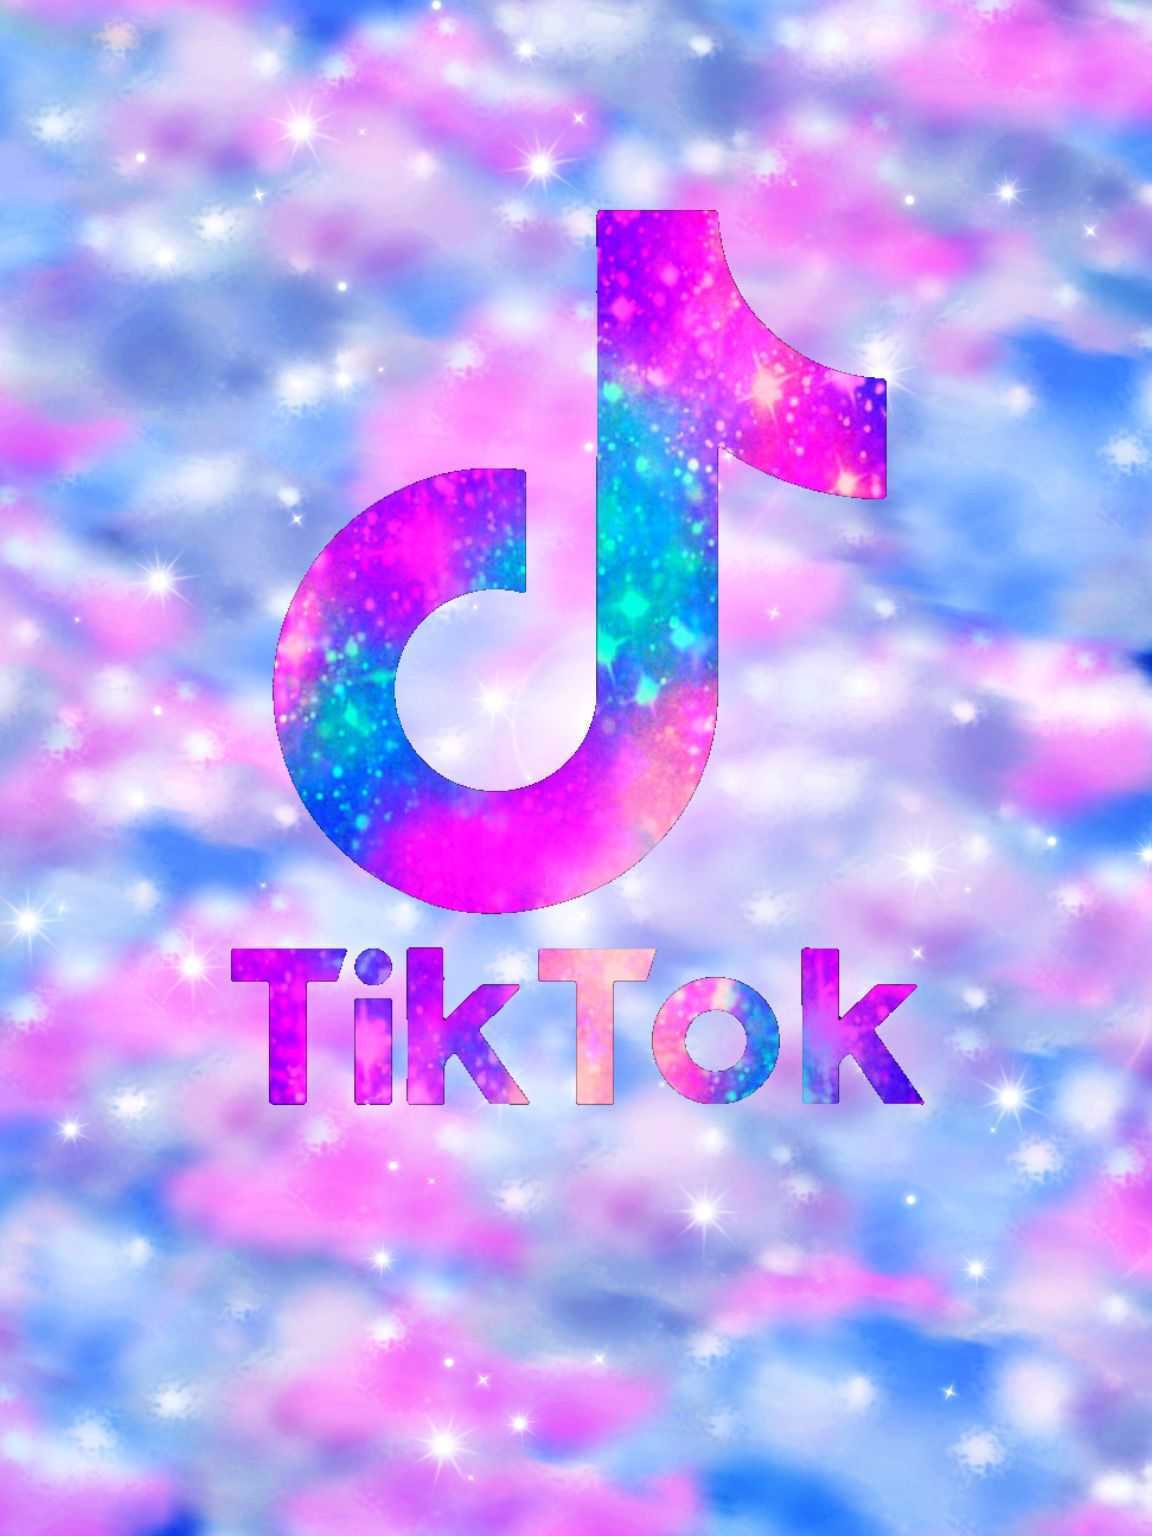 tiktok app for desktop